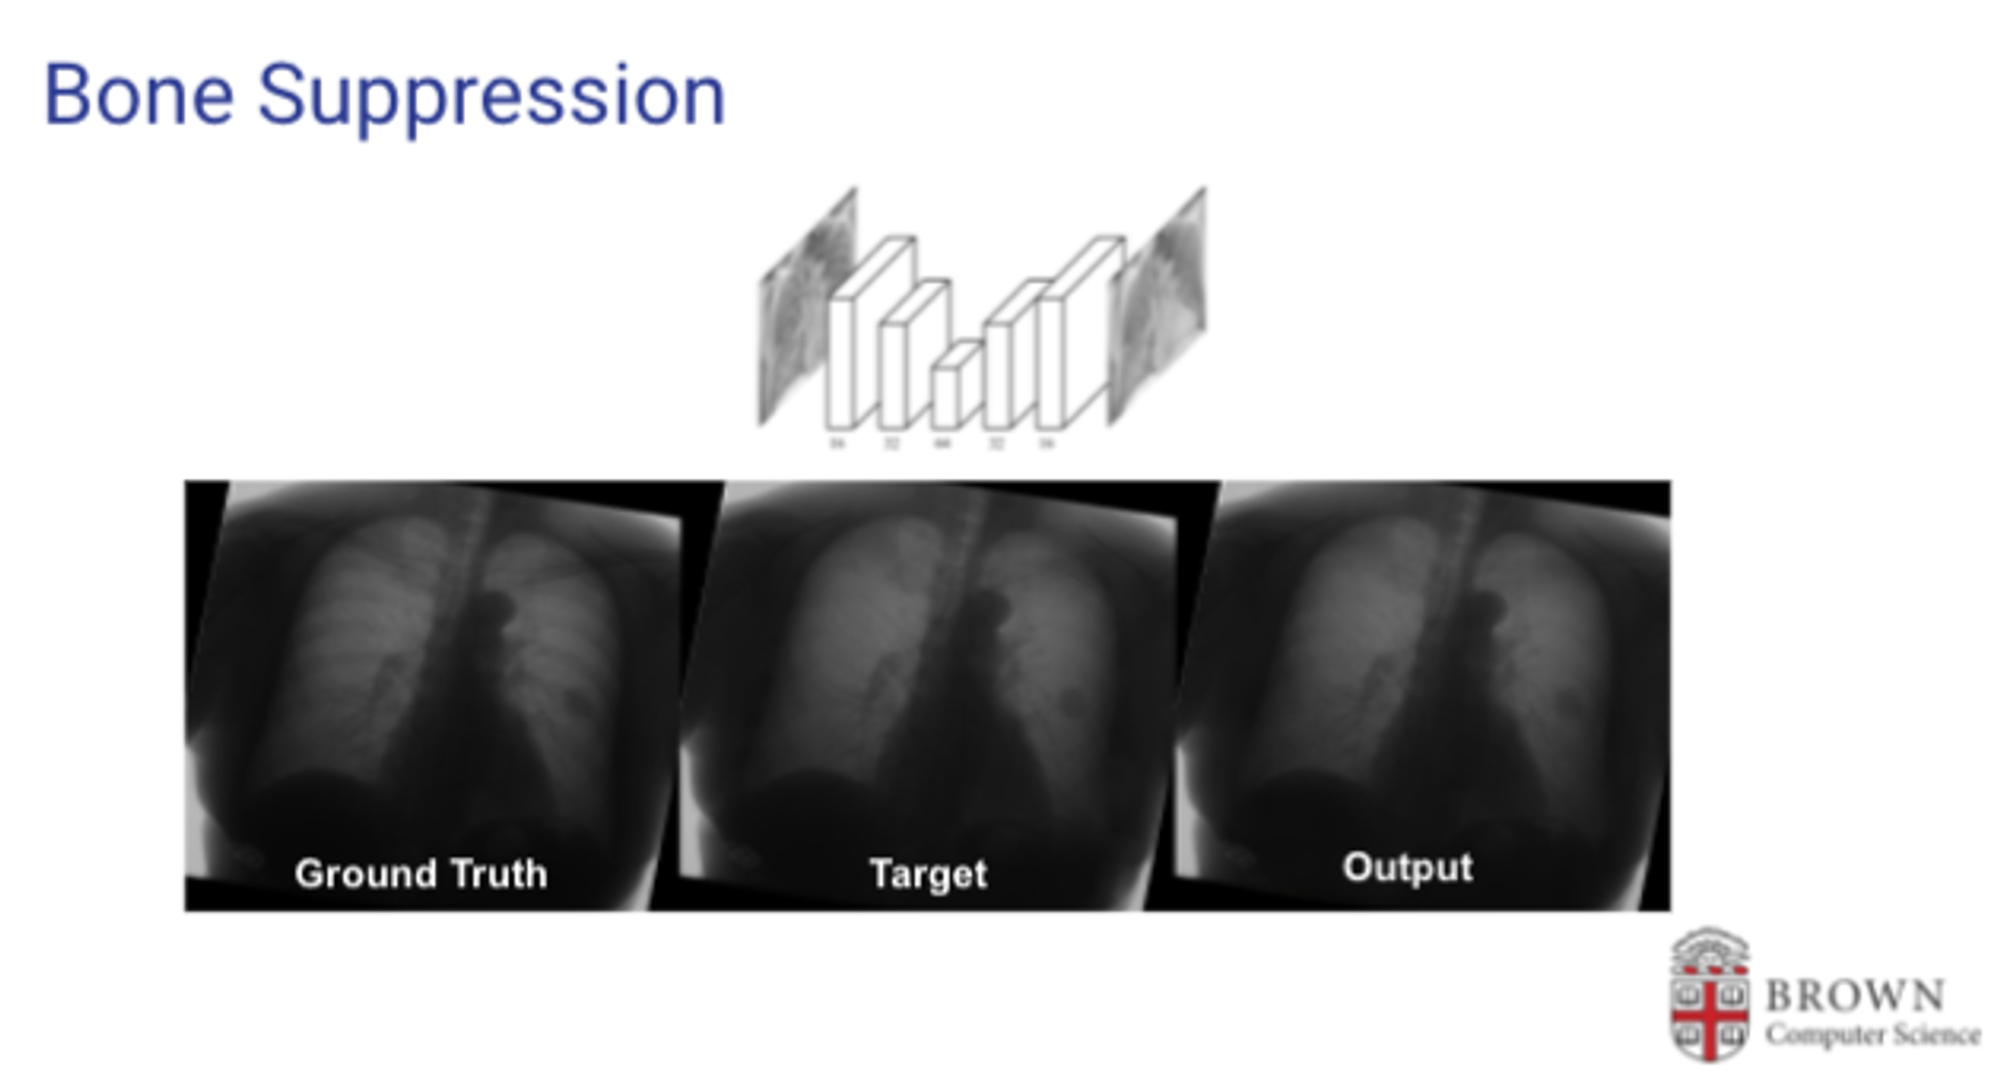 X-Ray Bone Suppression and Classification